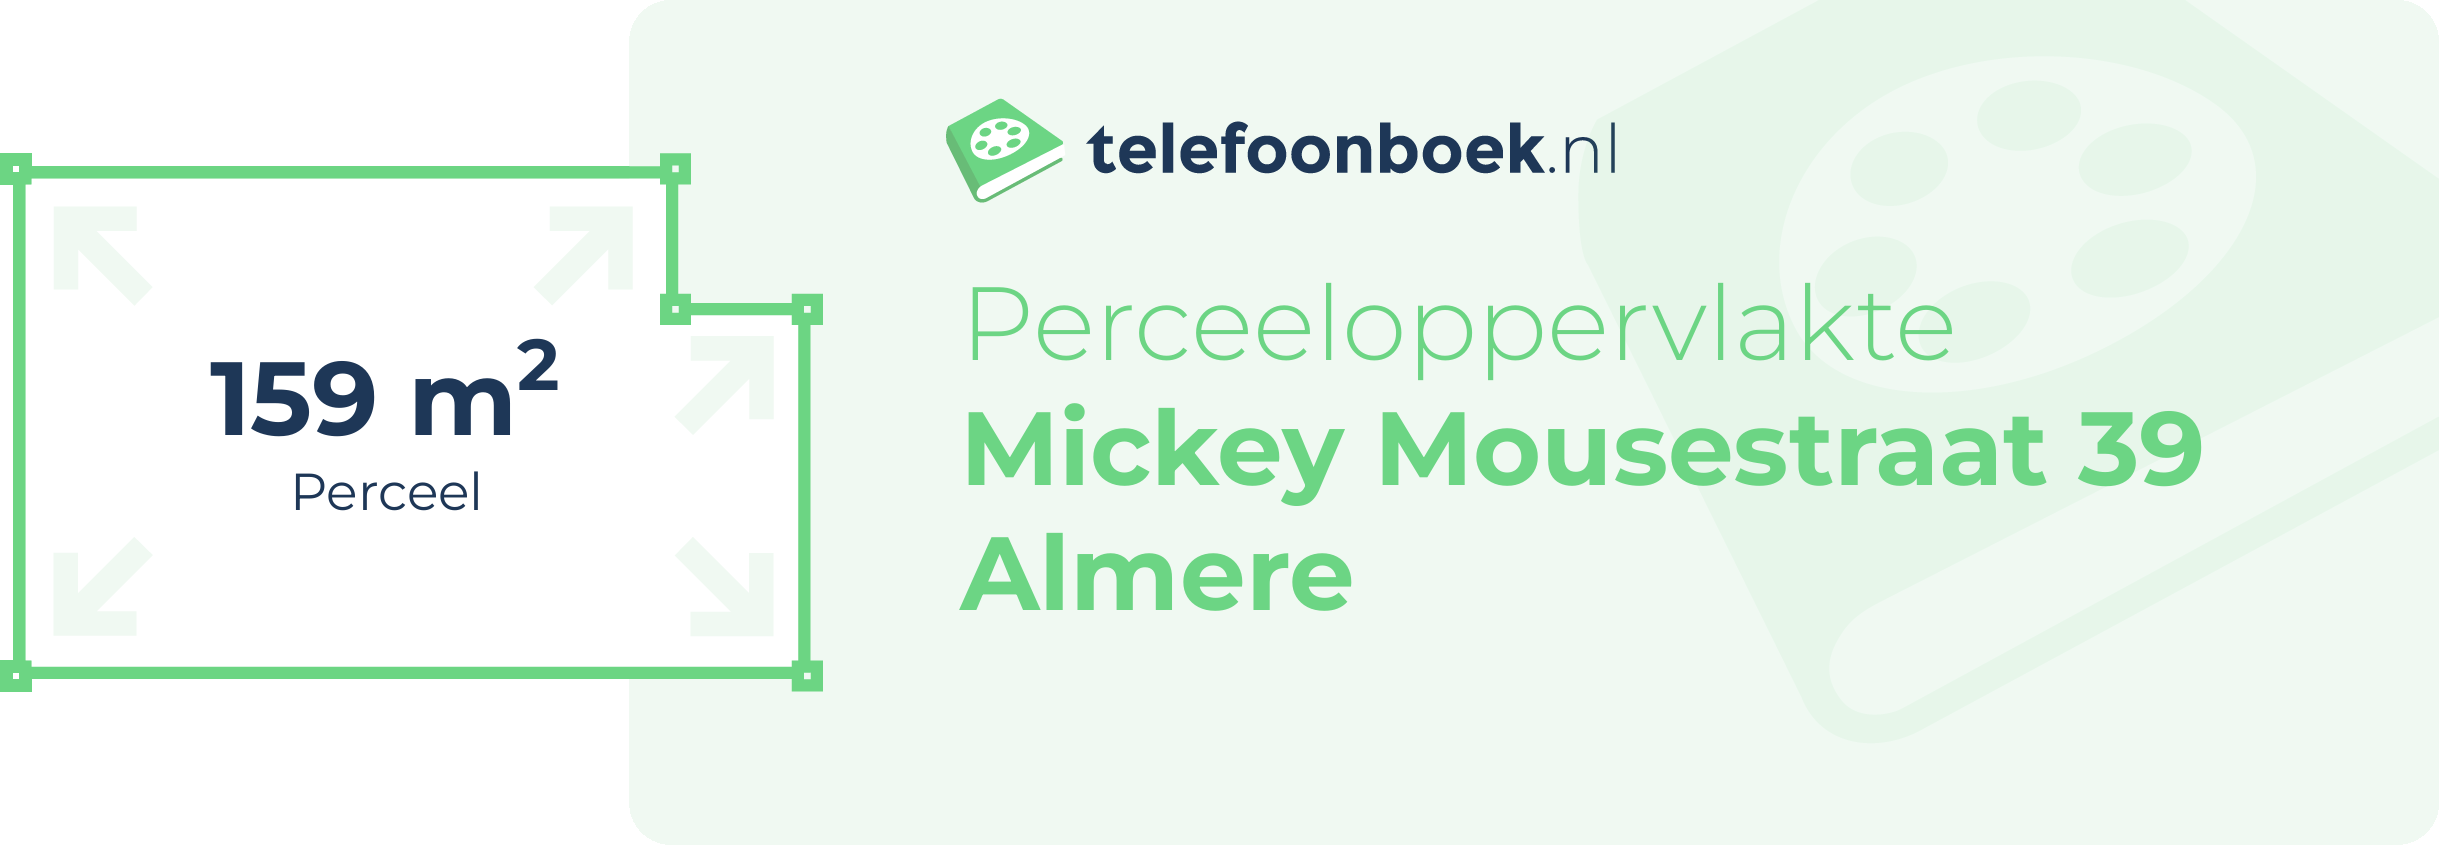 Perceeloppervlakte Mickey Mousestraat 39 Almere